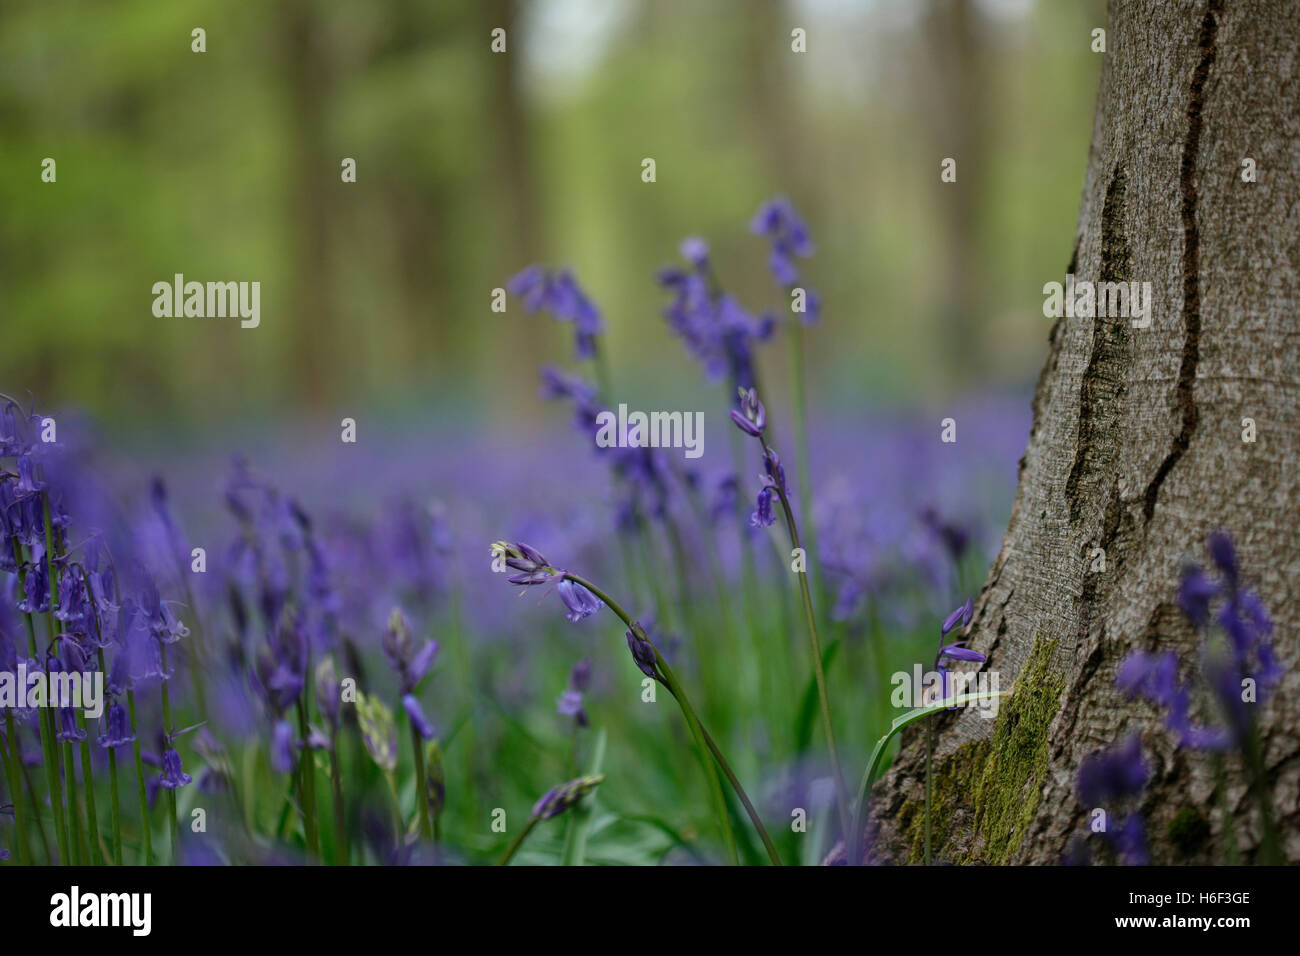 schönen Frühling Bluebell Holz - Erinnerung Jane Ann Butler Fotografie JABP1673 Stockfoto